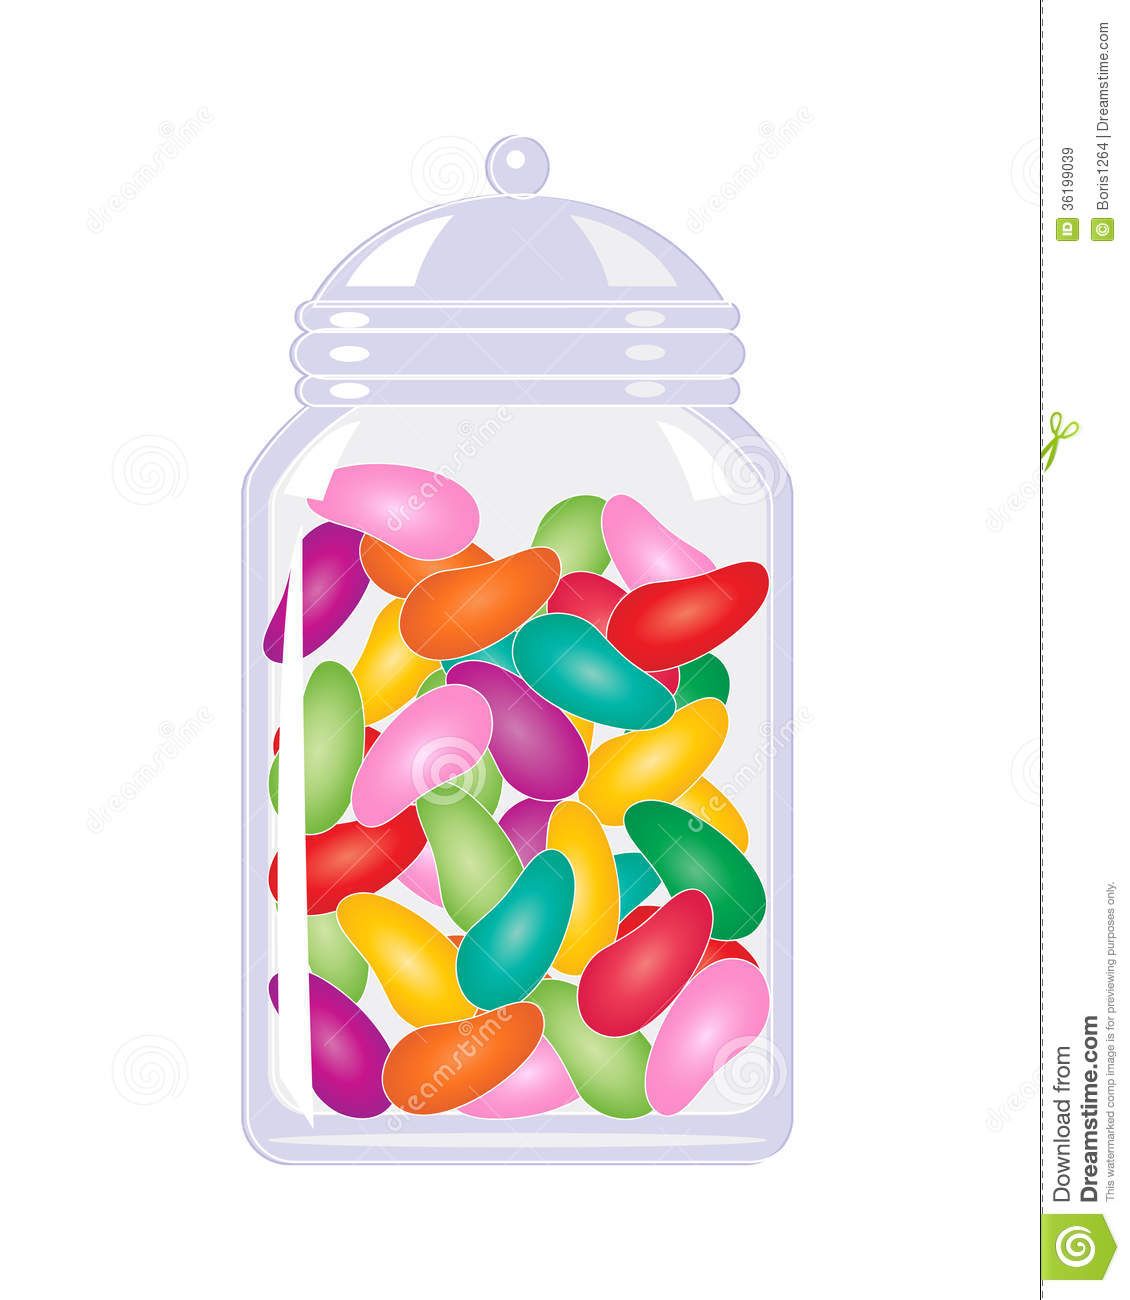 Jelly Bean Jar PNG - 158046